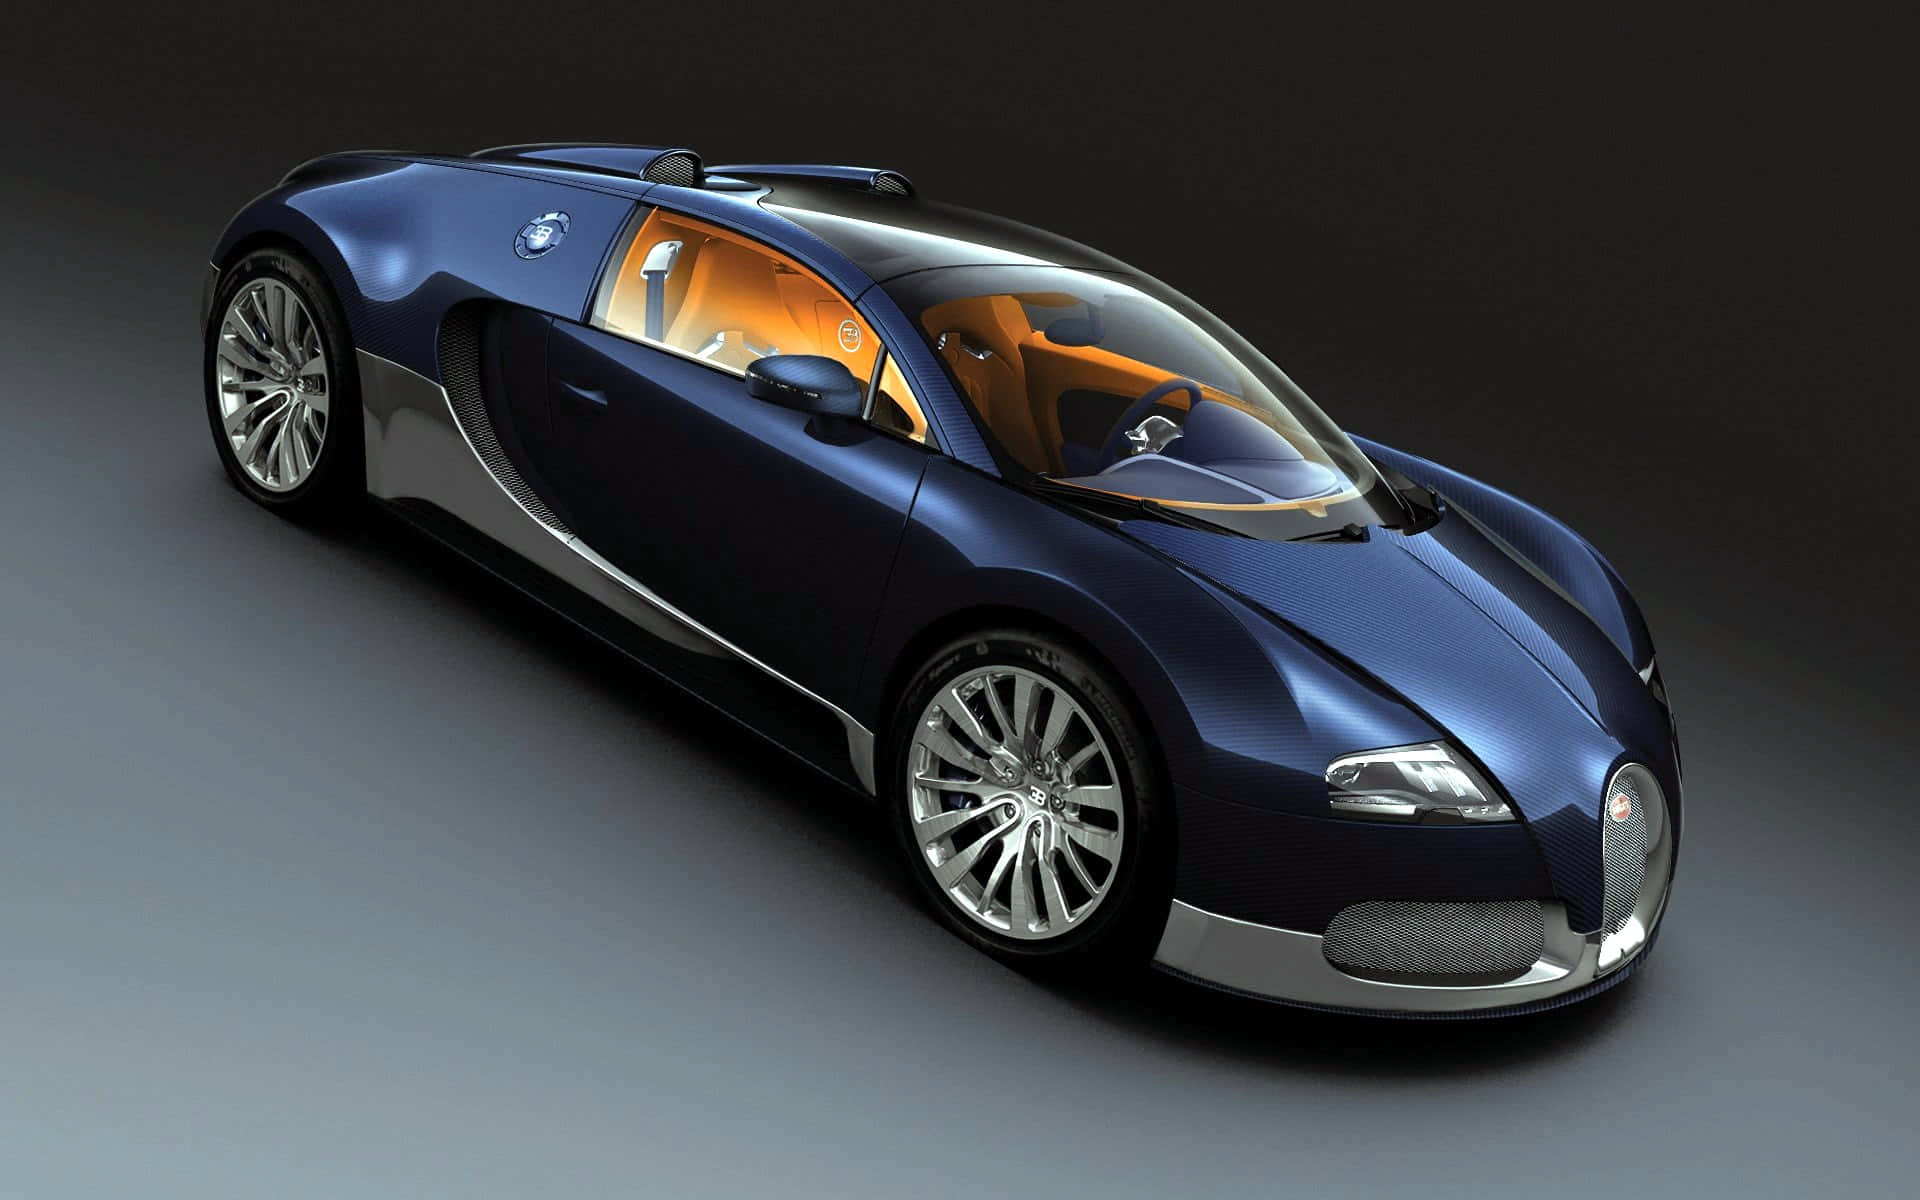 Luxurious Bugatti Veyron in Dynamic Action Wallpaper